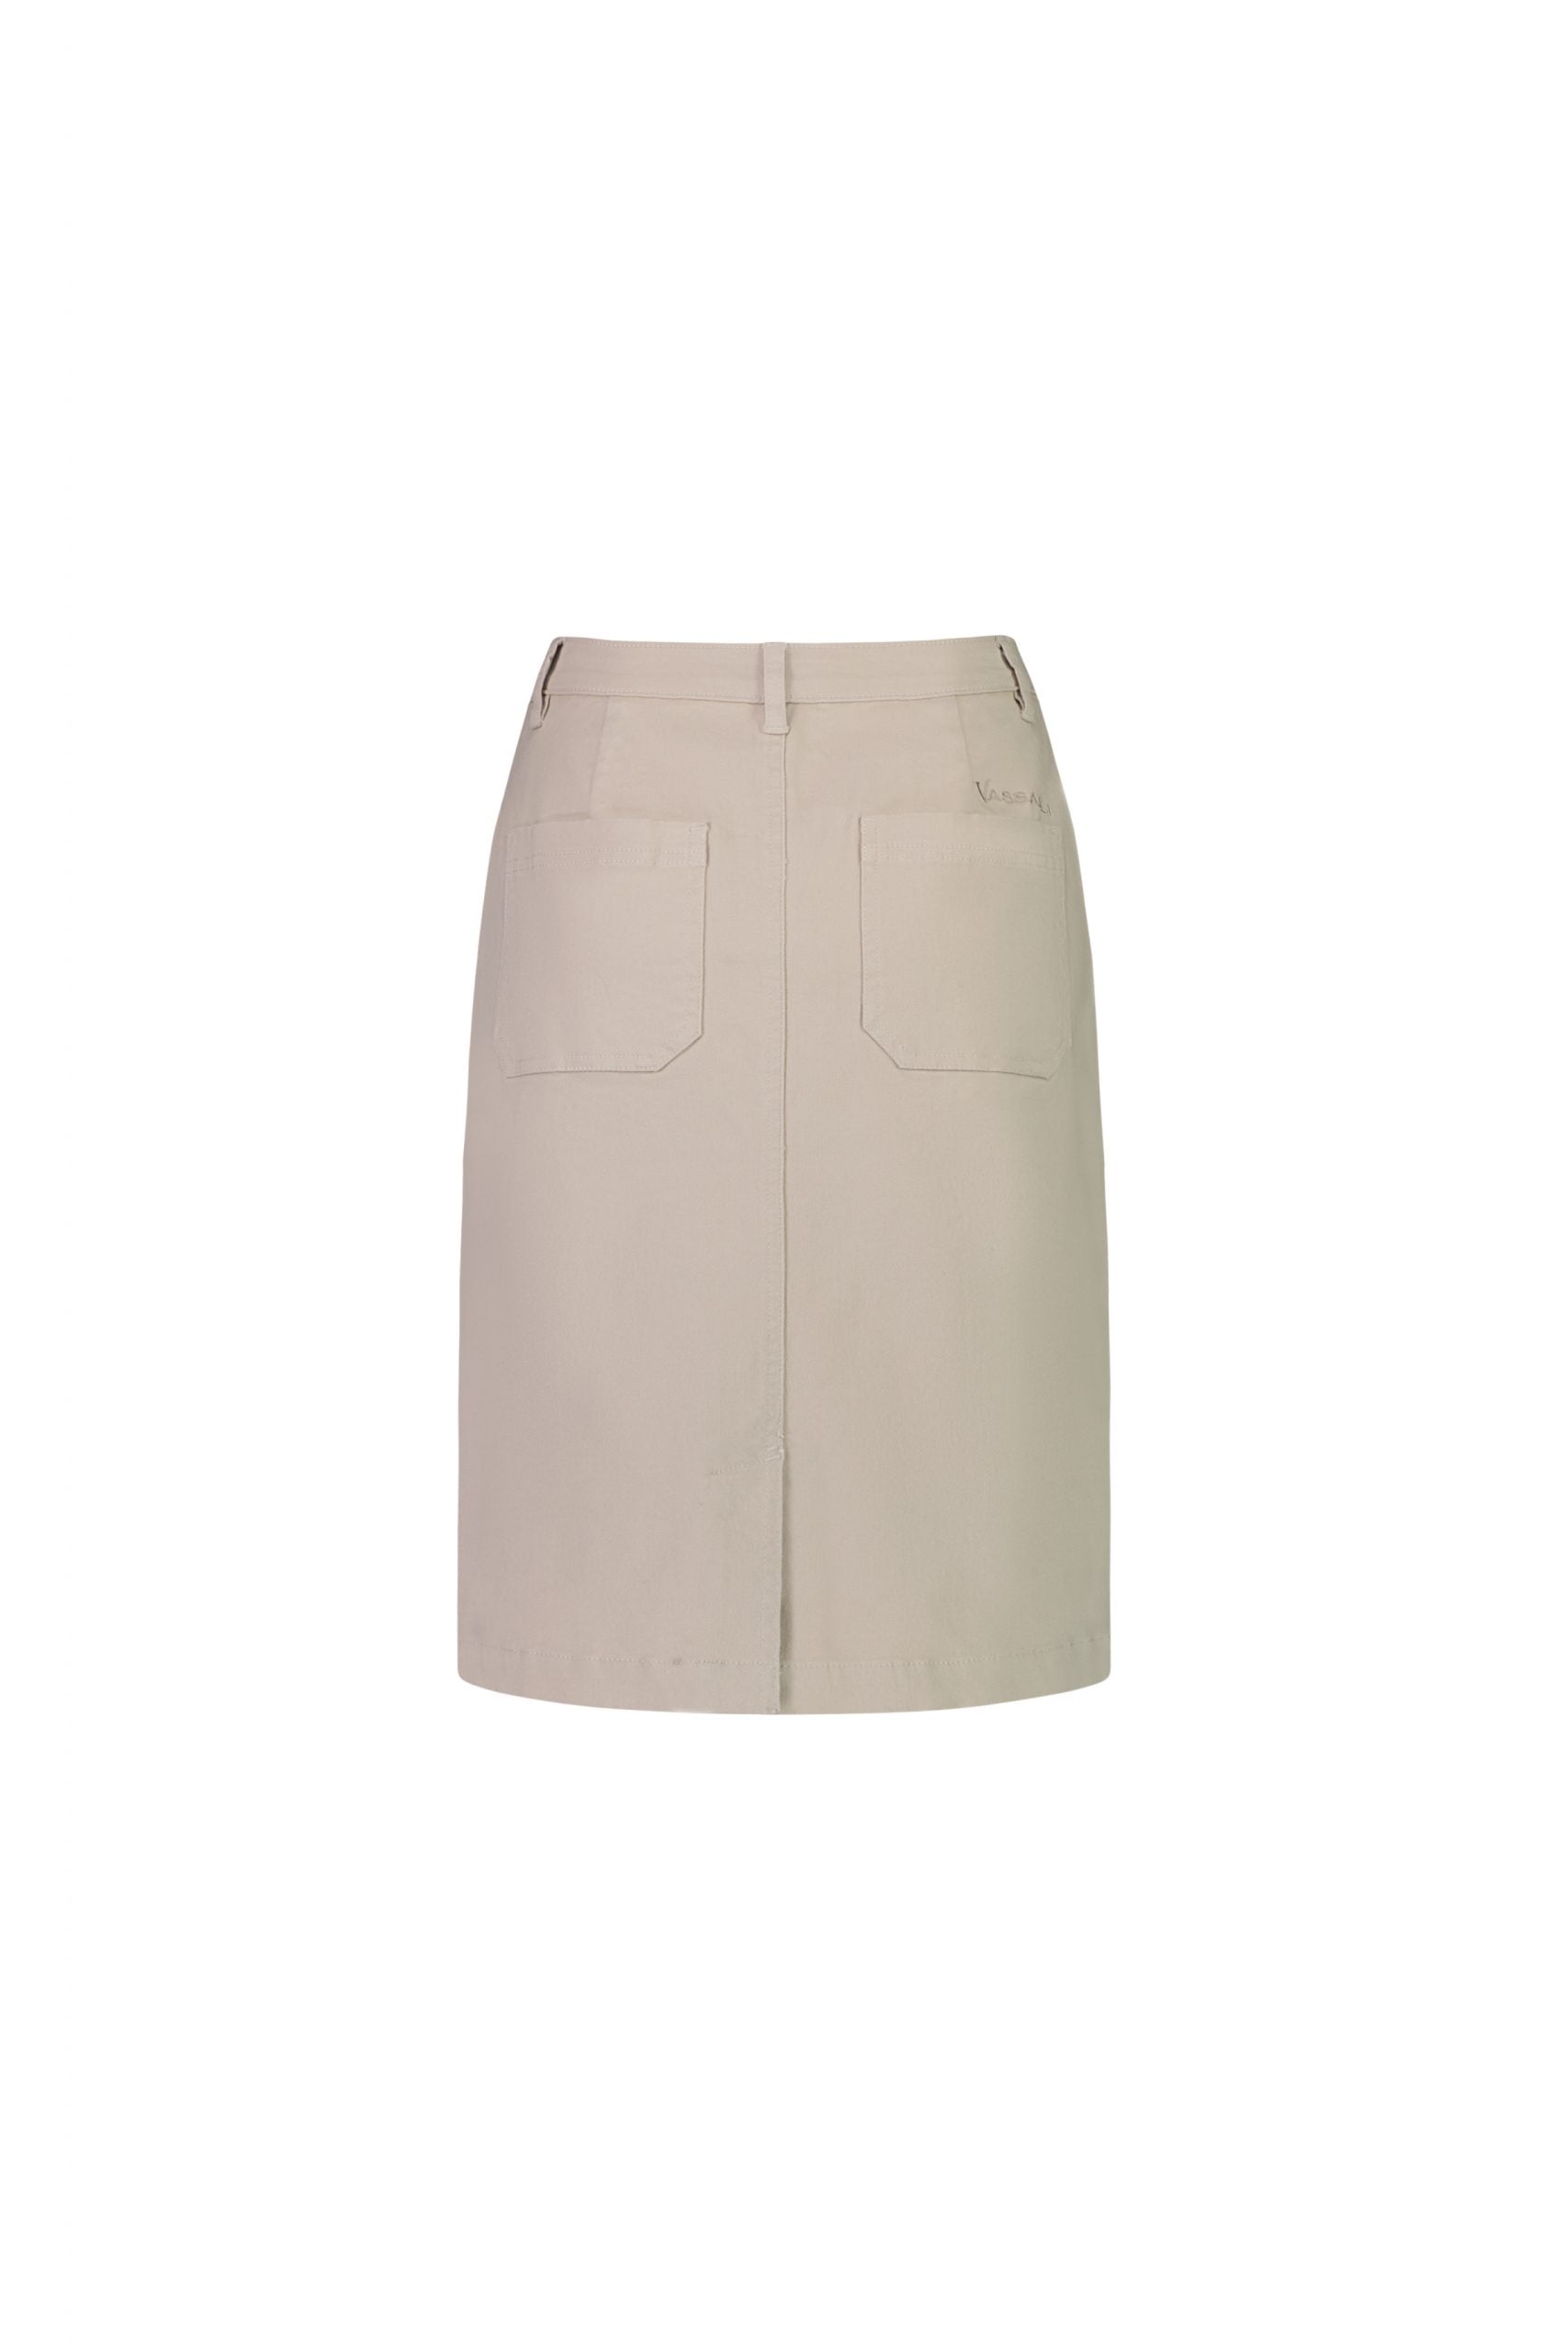 Cotton Drill Skirt with Back Vent | Mushroom - Vassalli - Beechworth Emporium